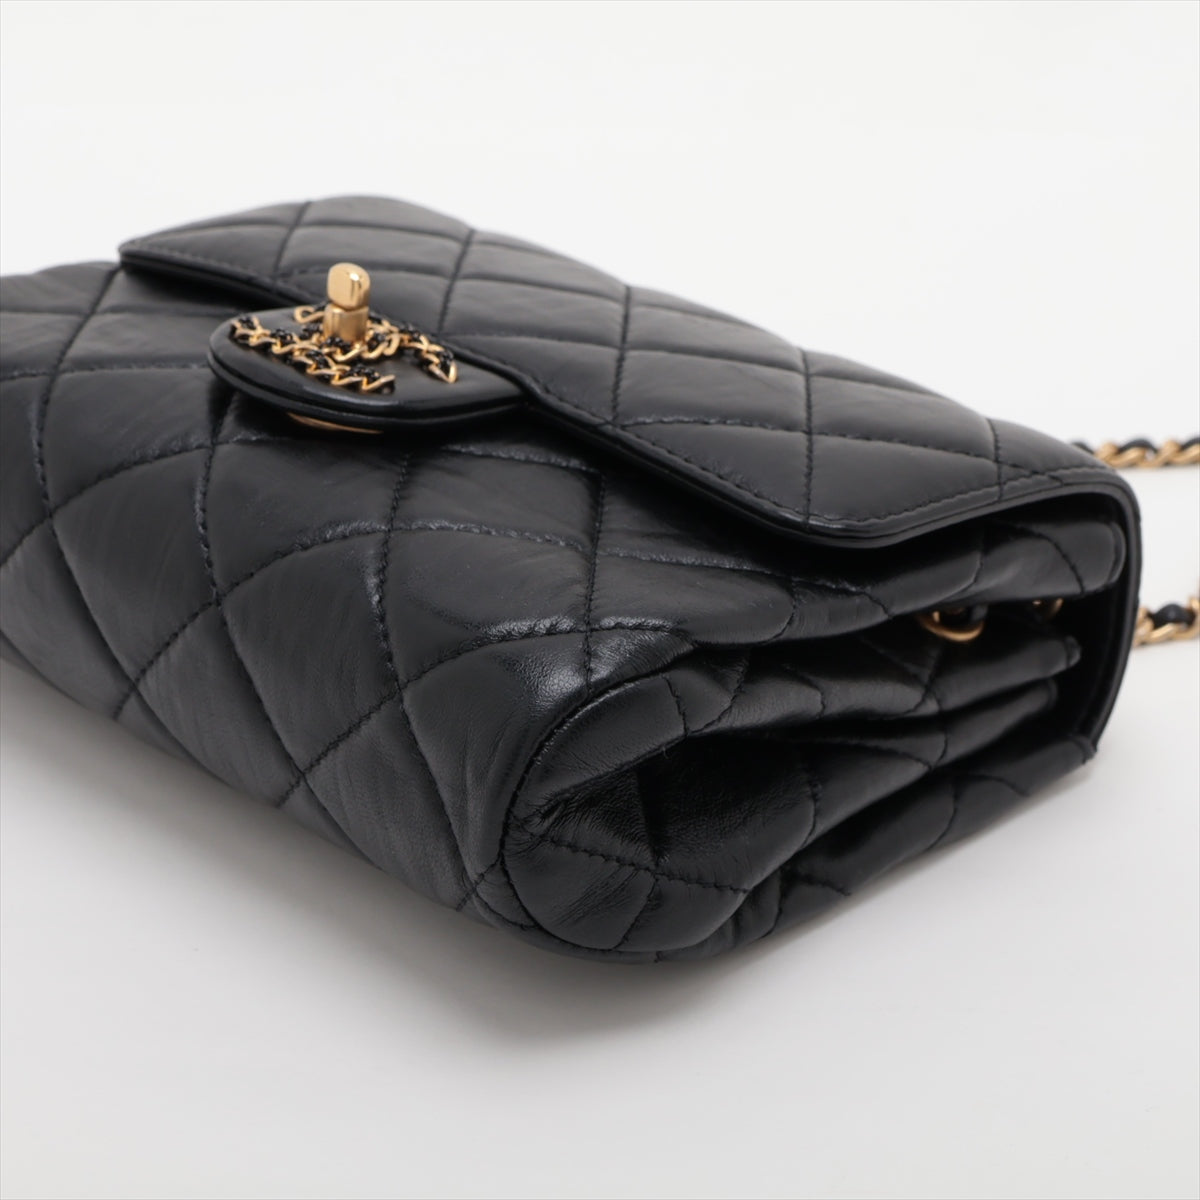 Chanel Matelasse Lambskin Single flap single chain bag Black Gold Metal fittings